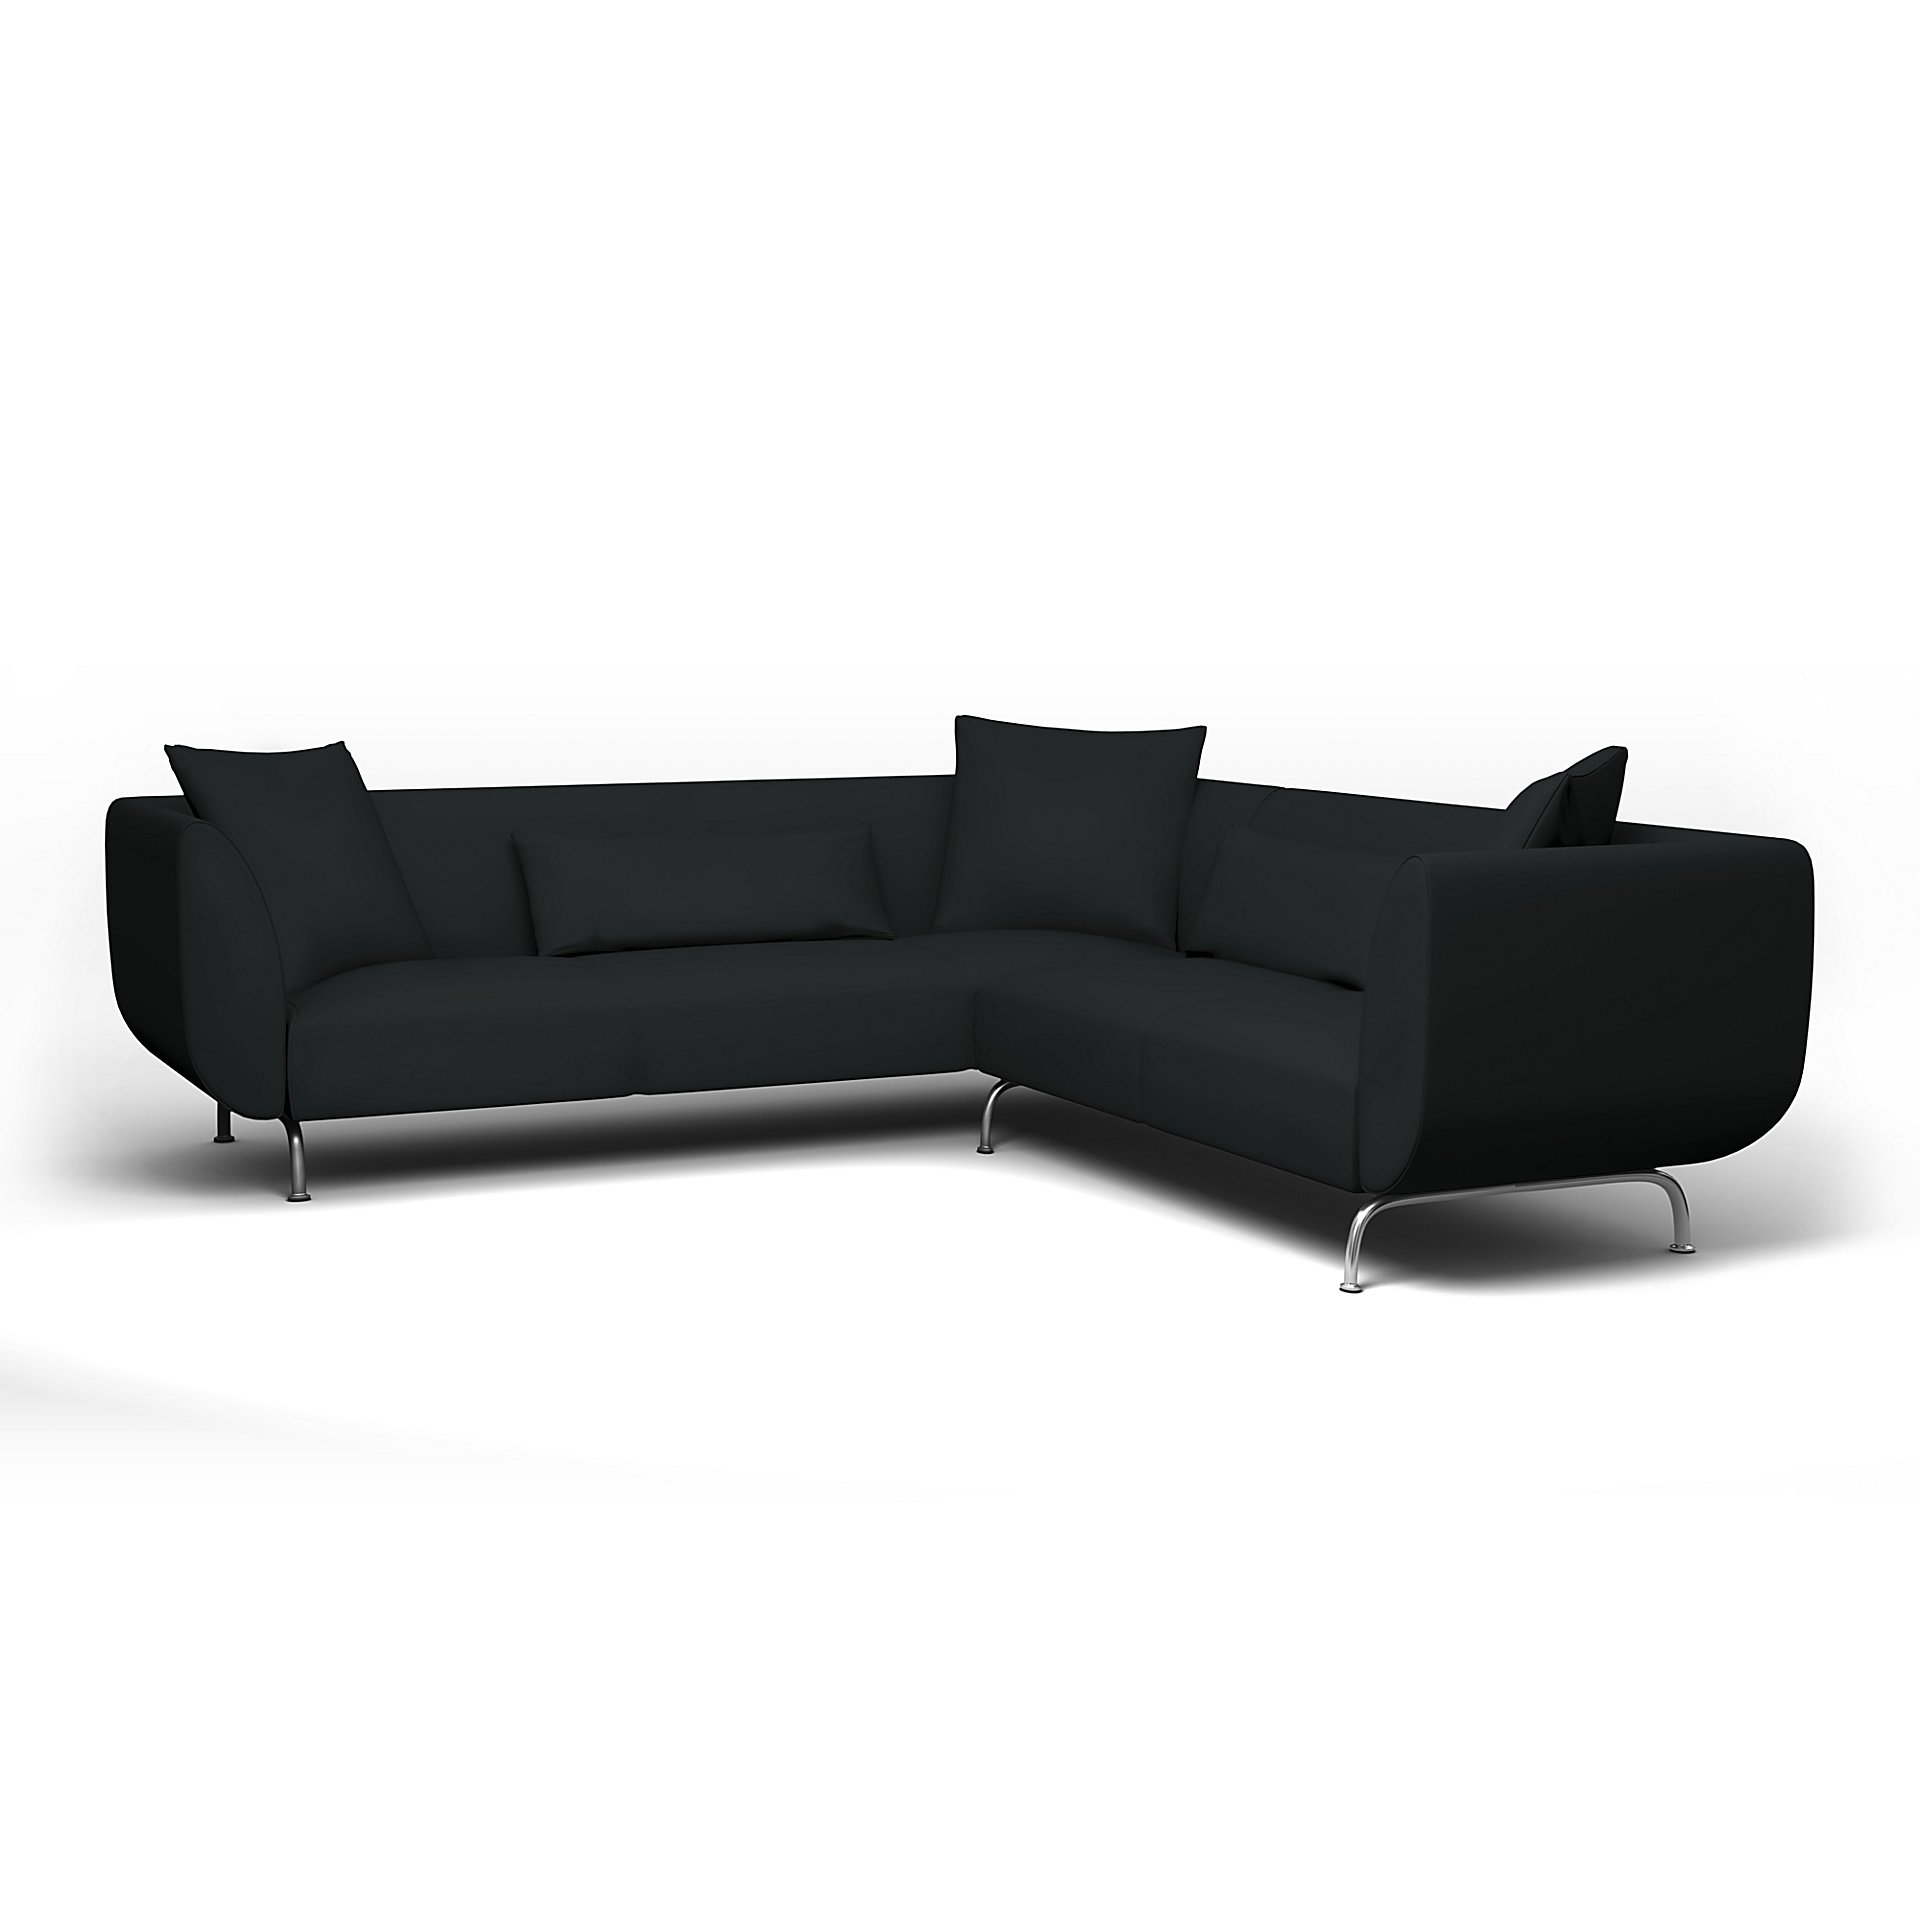 IKEA - Stromstad Corner Sofa Cover, Jet Black, Cotton - Bemz